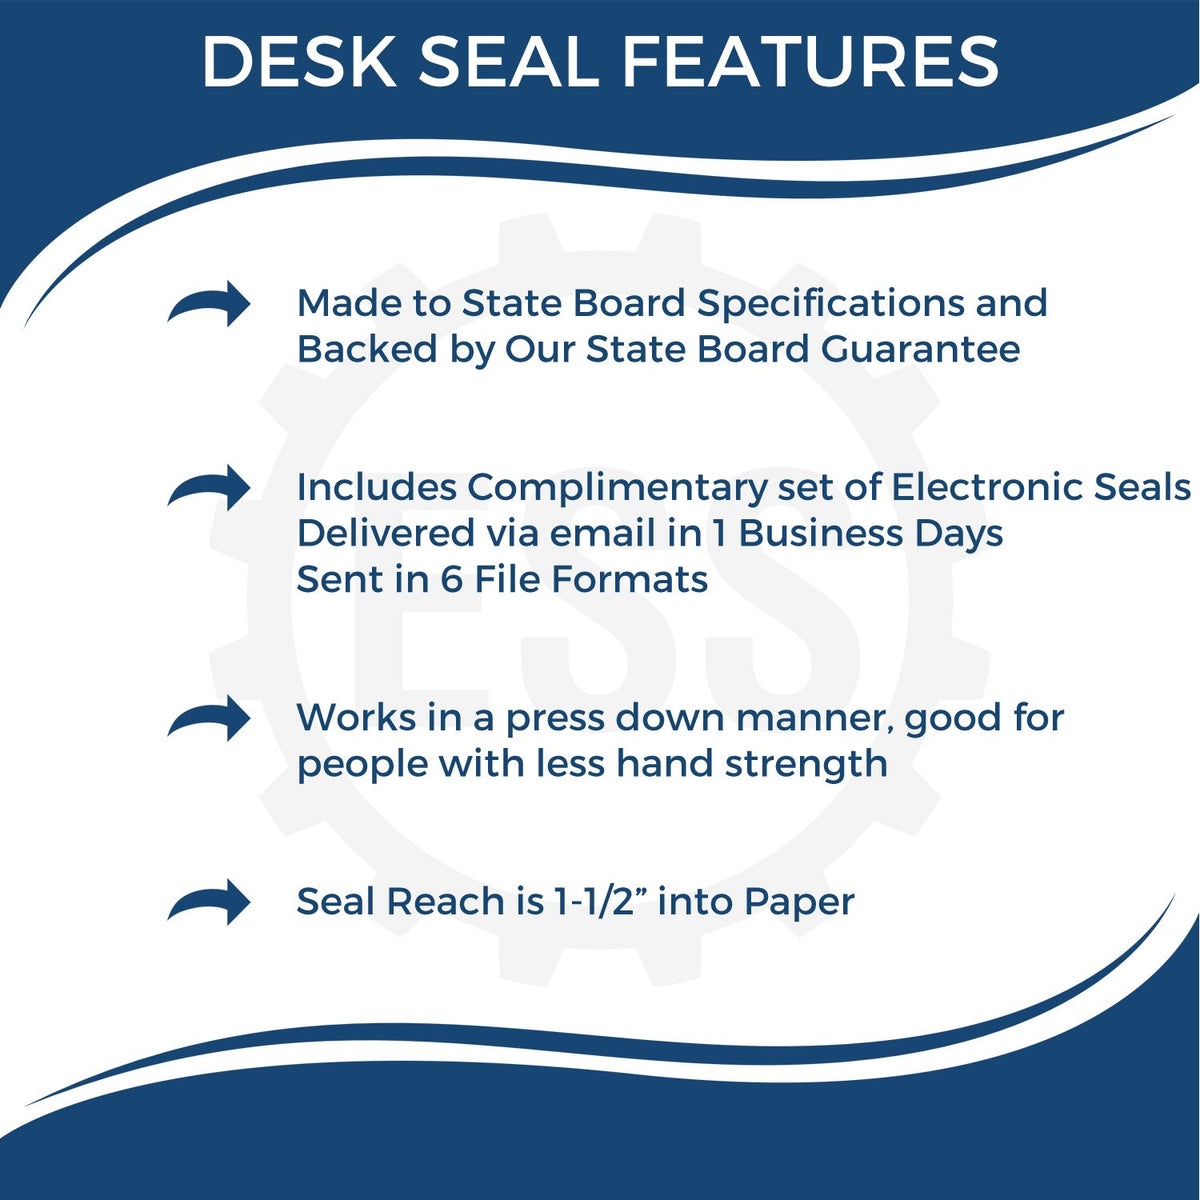 Indiana Engineer Desk Seal